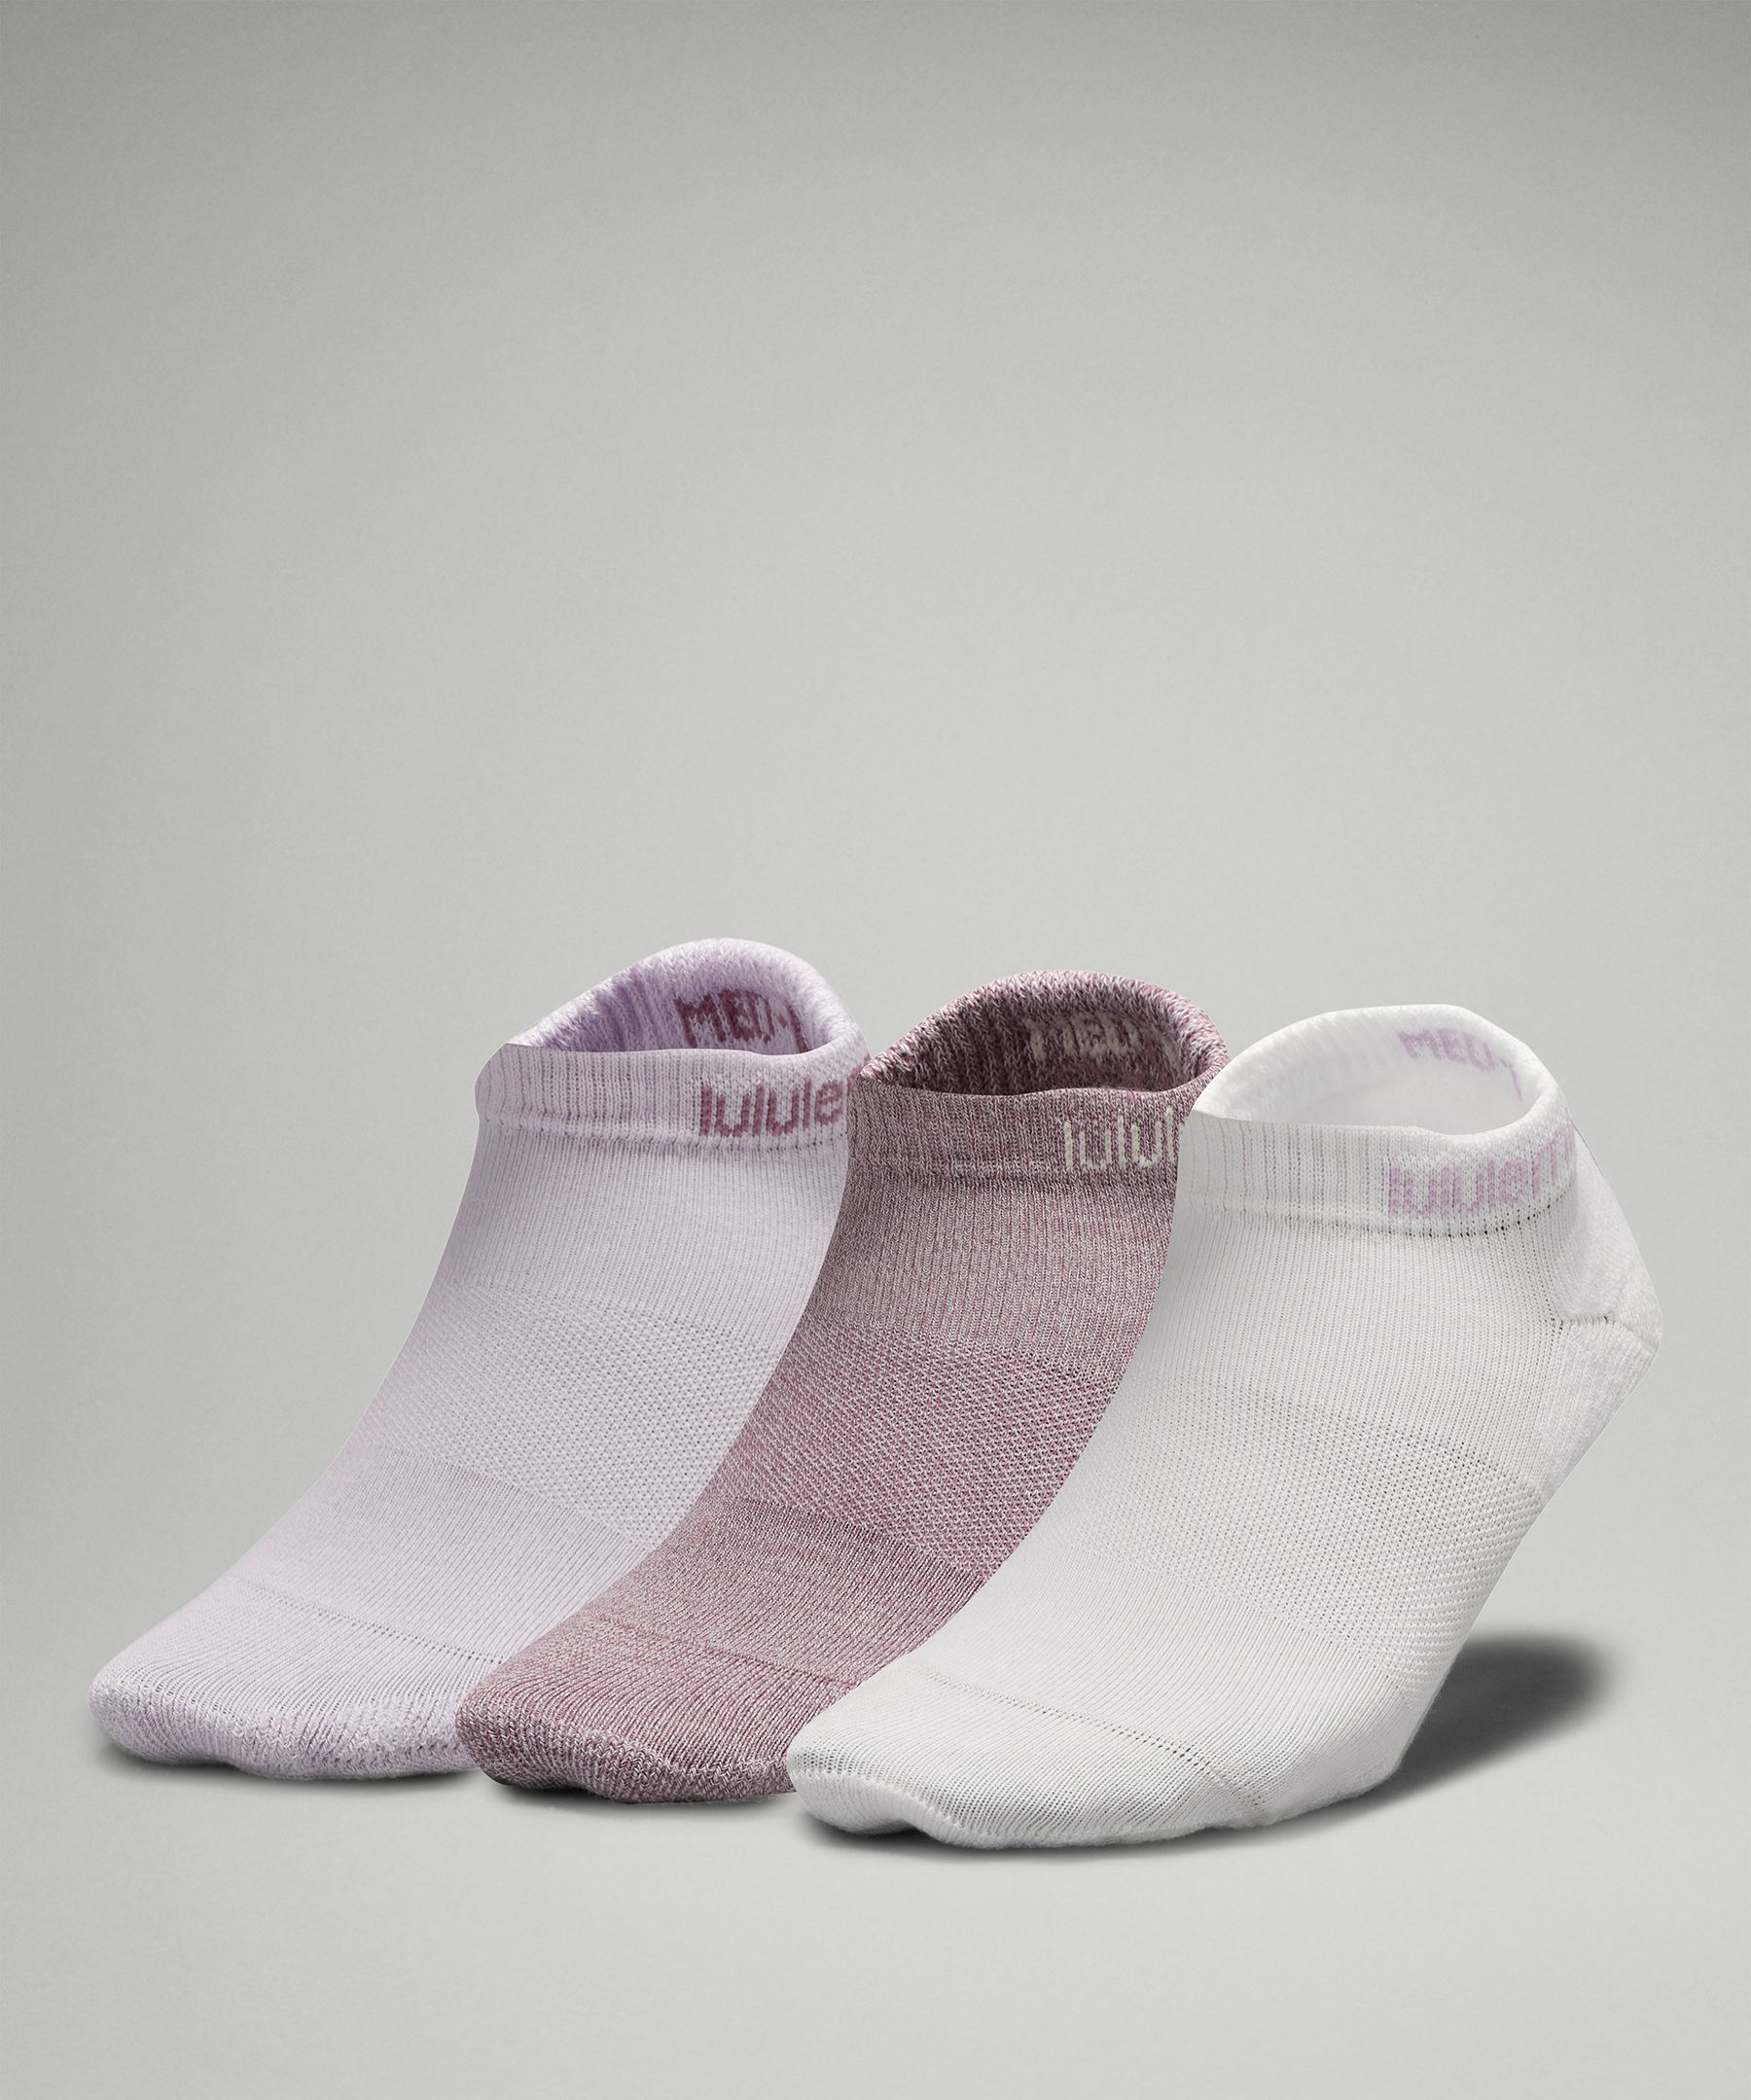 Lululemon Daily Stride Comfort Low-ankle Socks 3 Pack